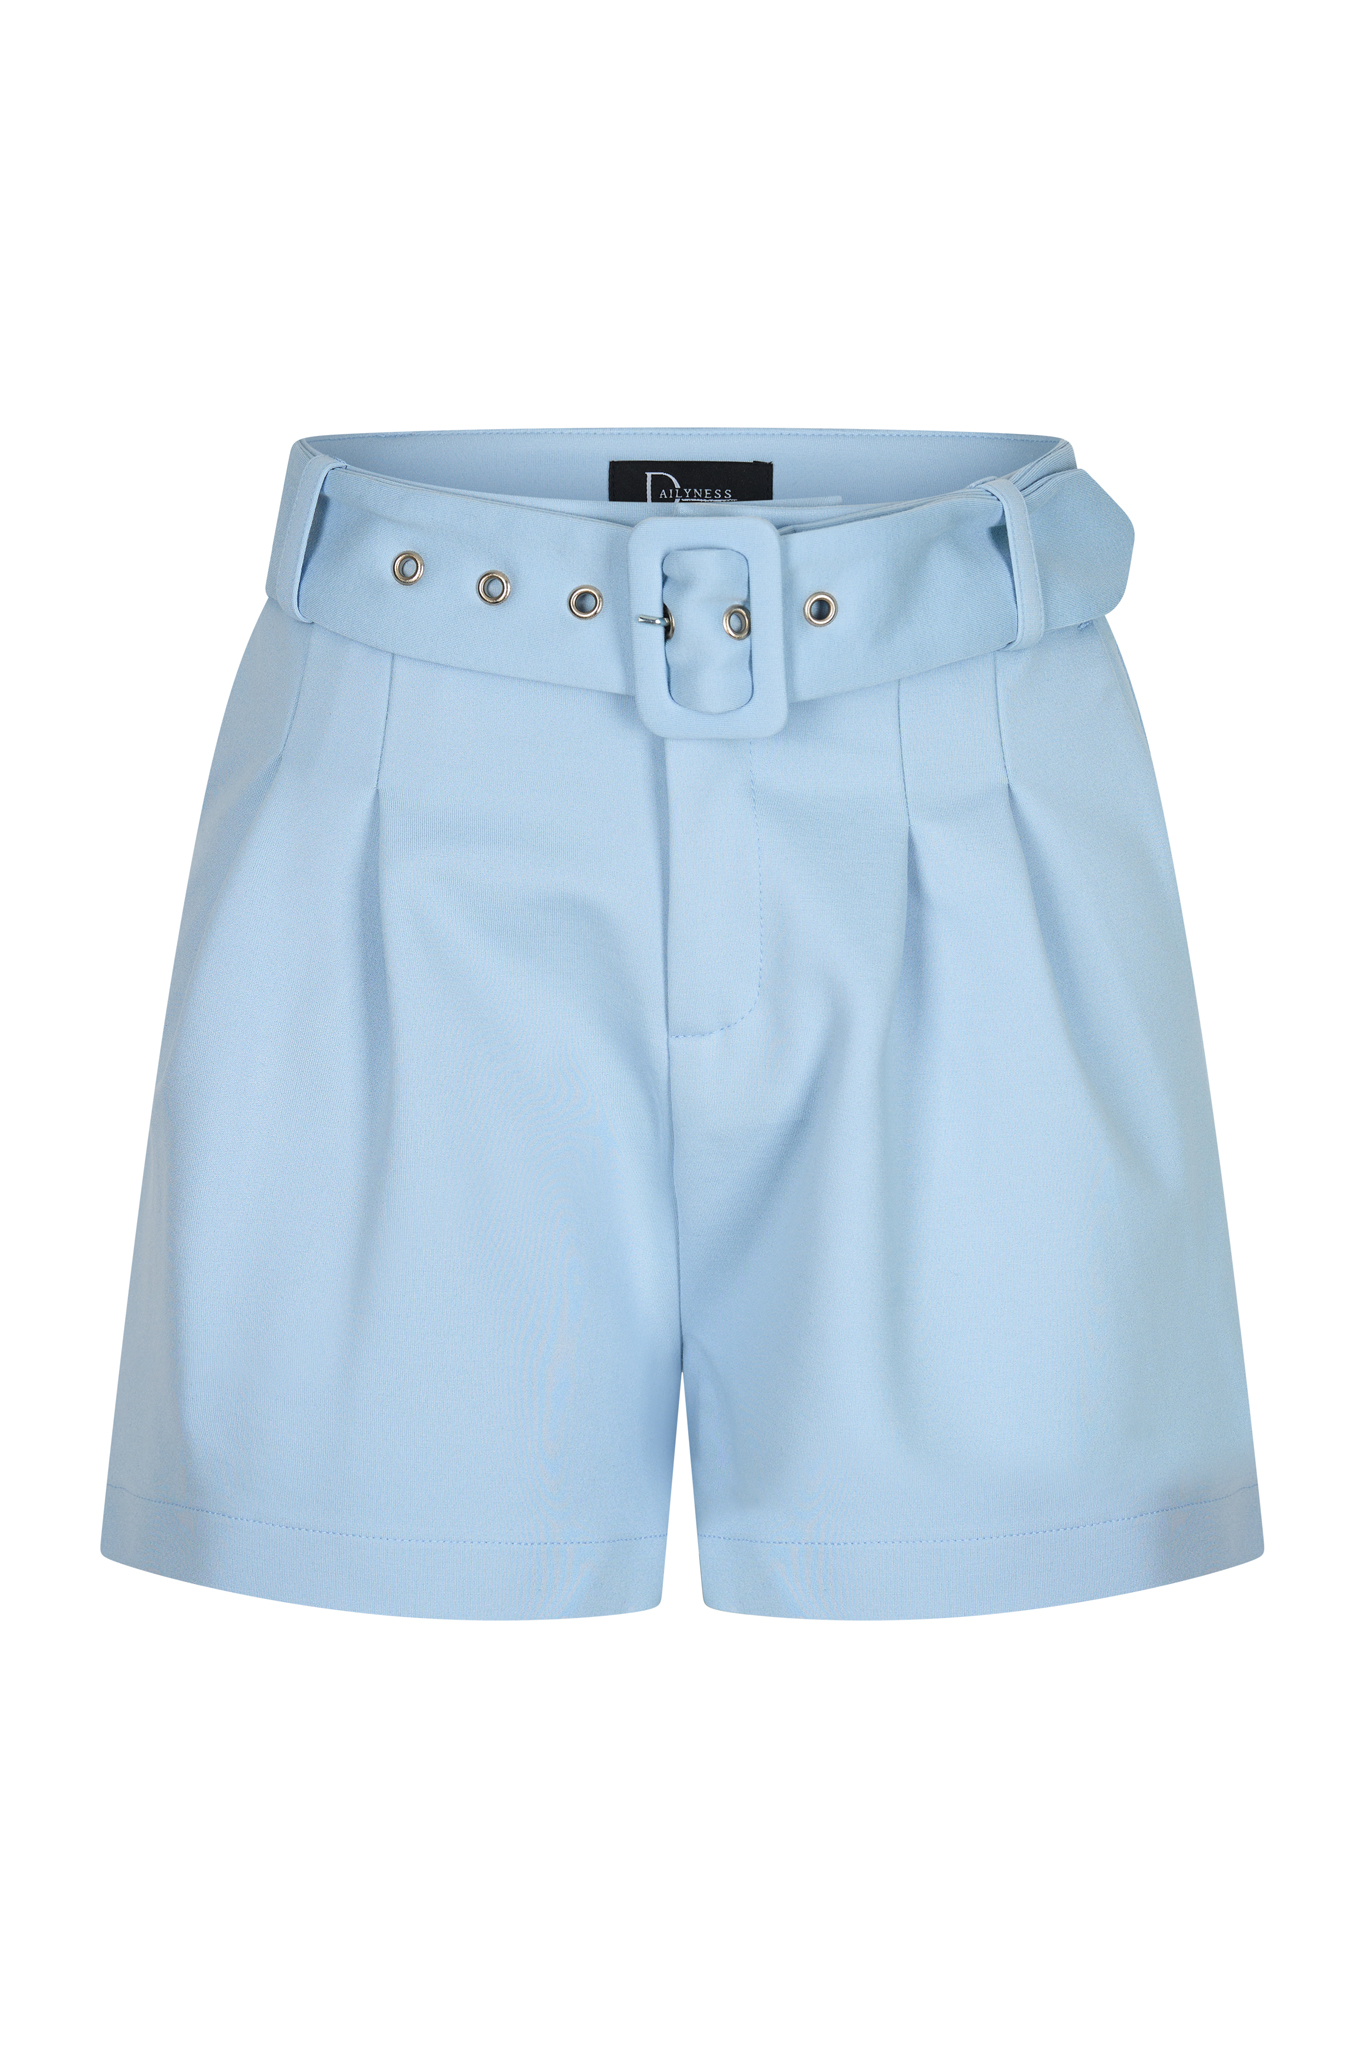 Ladies blue shorts